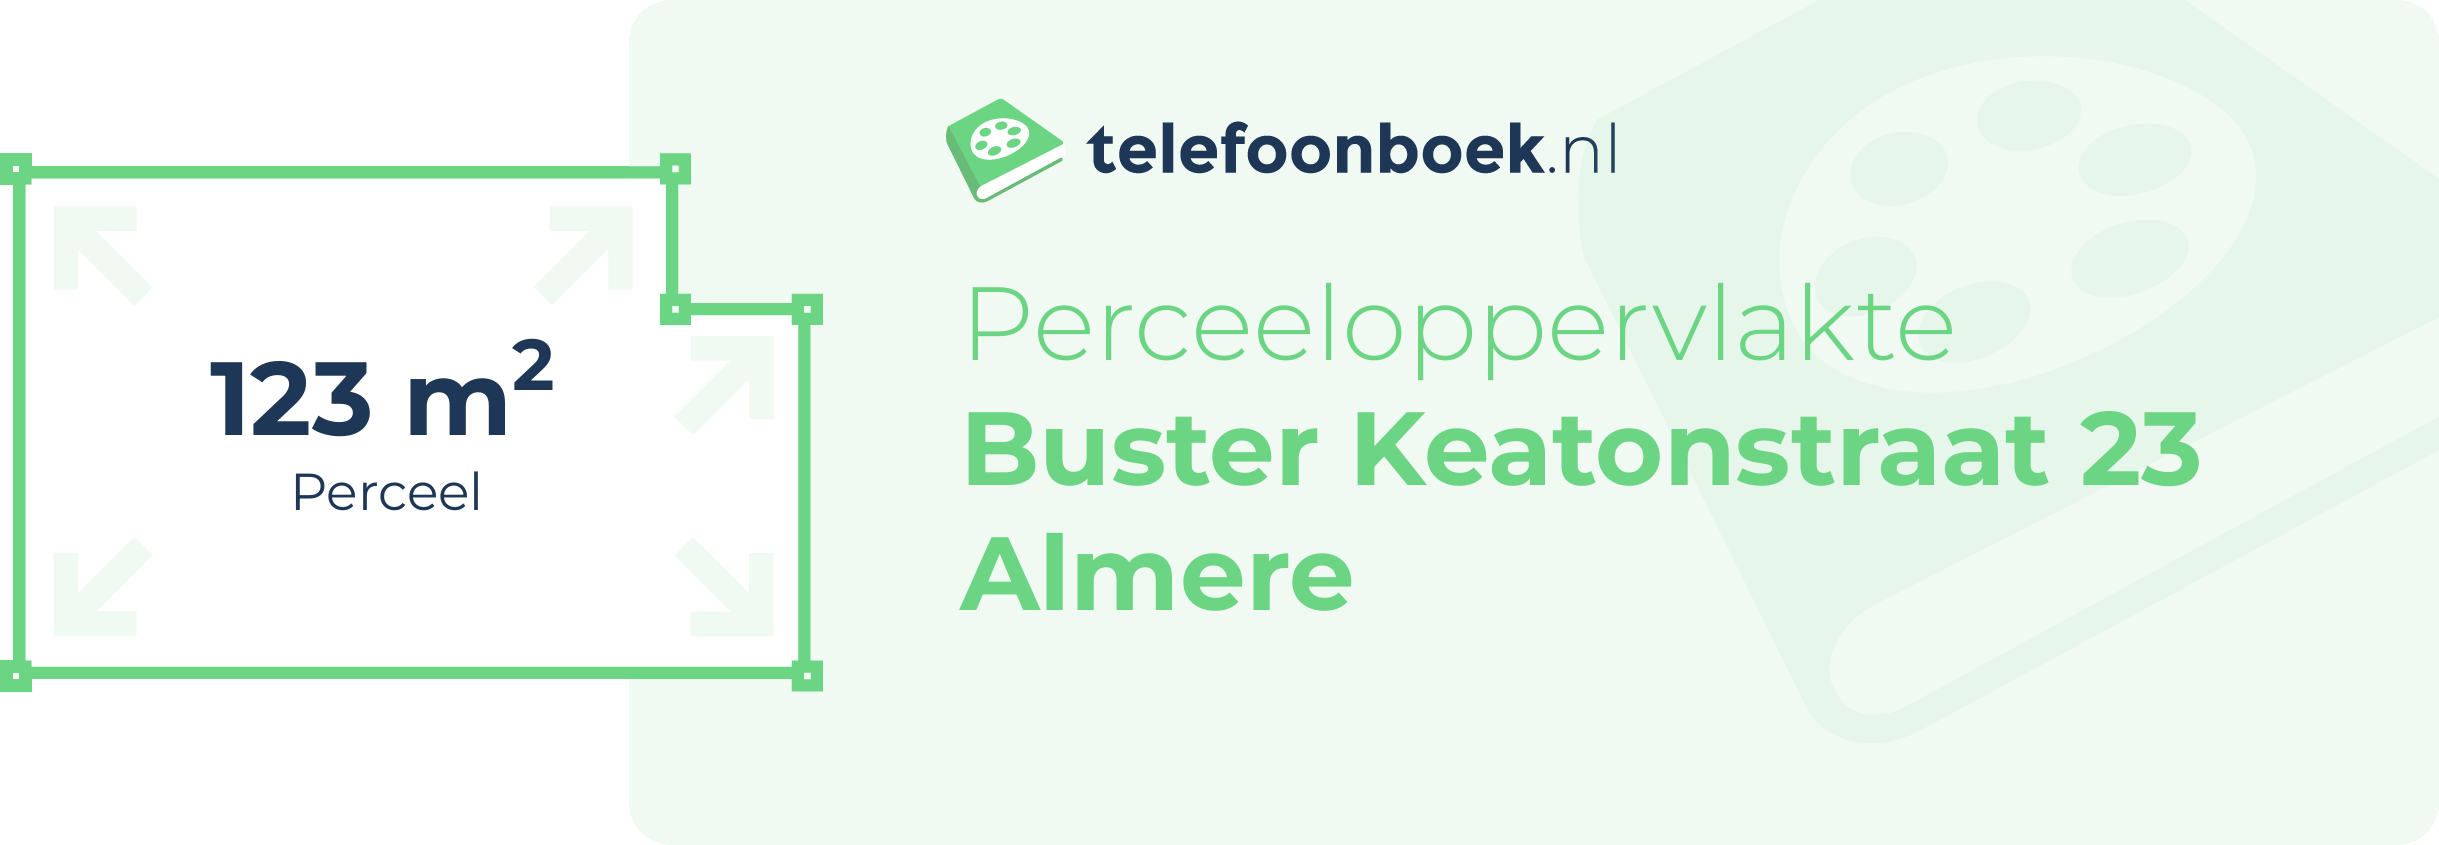 Perceeloppervlakte Buster Keatonstraat 23 Almere